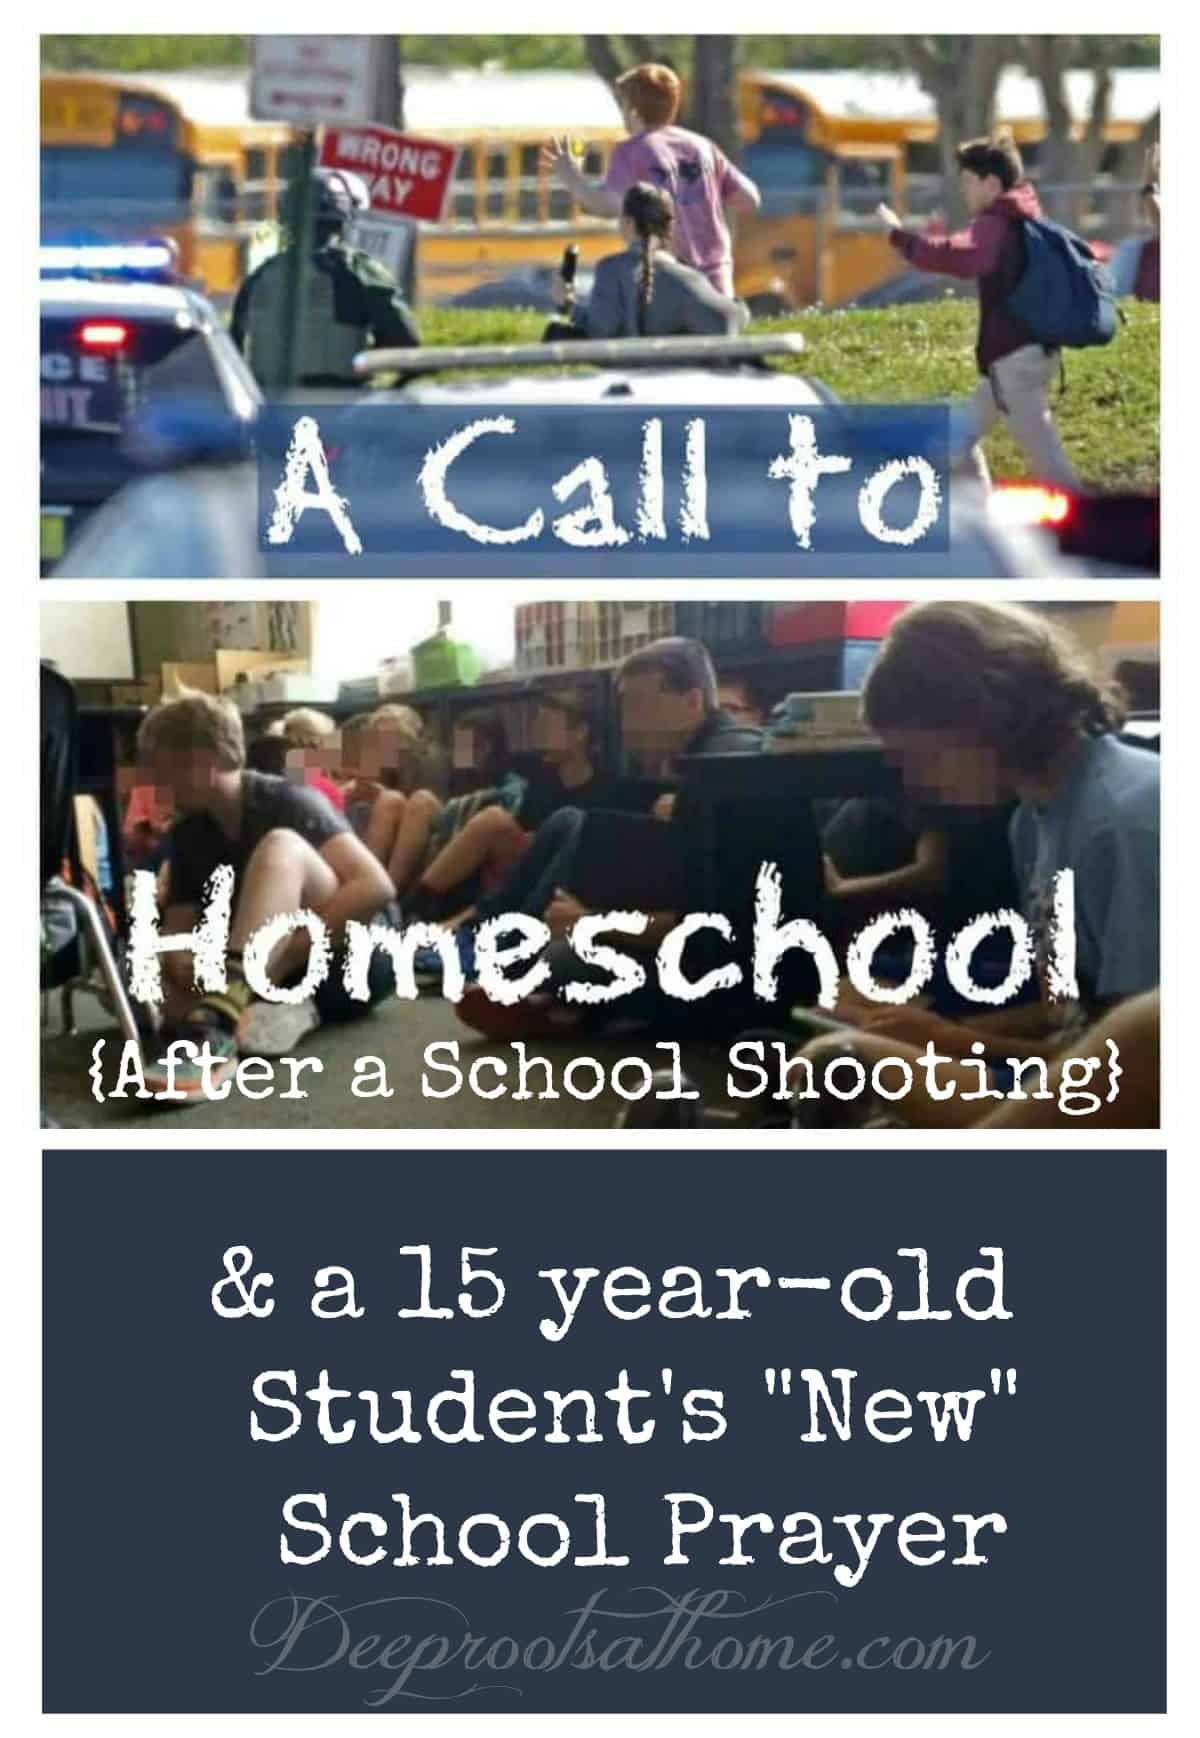 School Shooting & A Sage Student's School Prayer. Students run from Marjory Stoneman Douglas High School